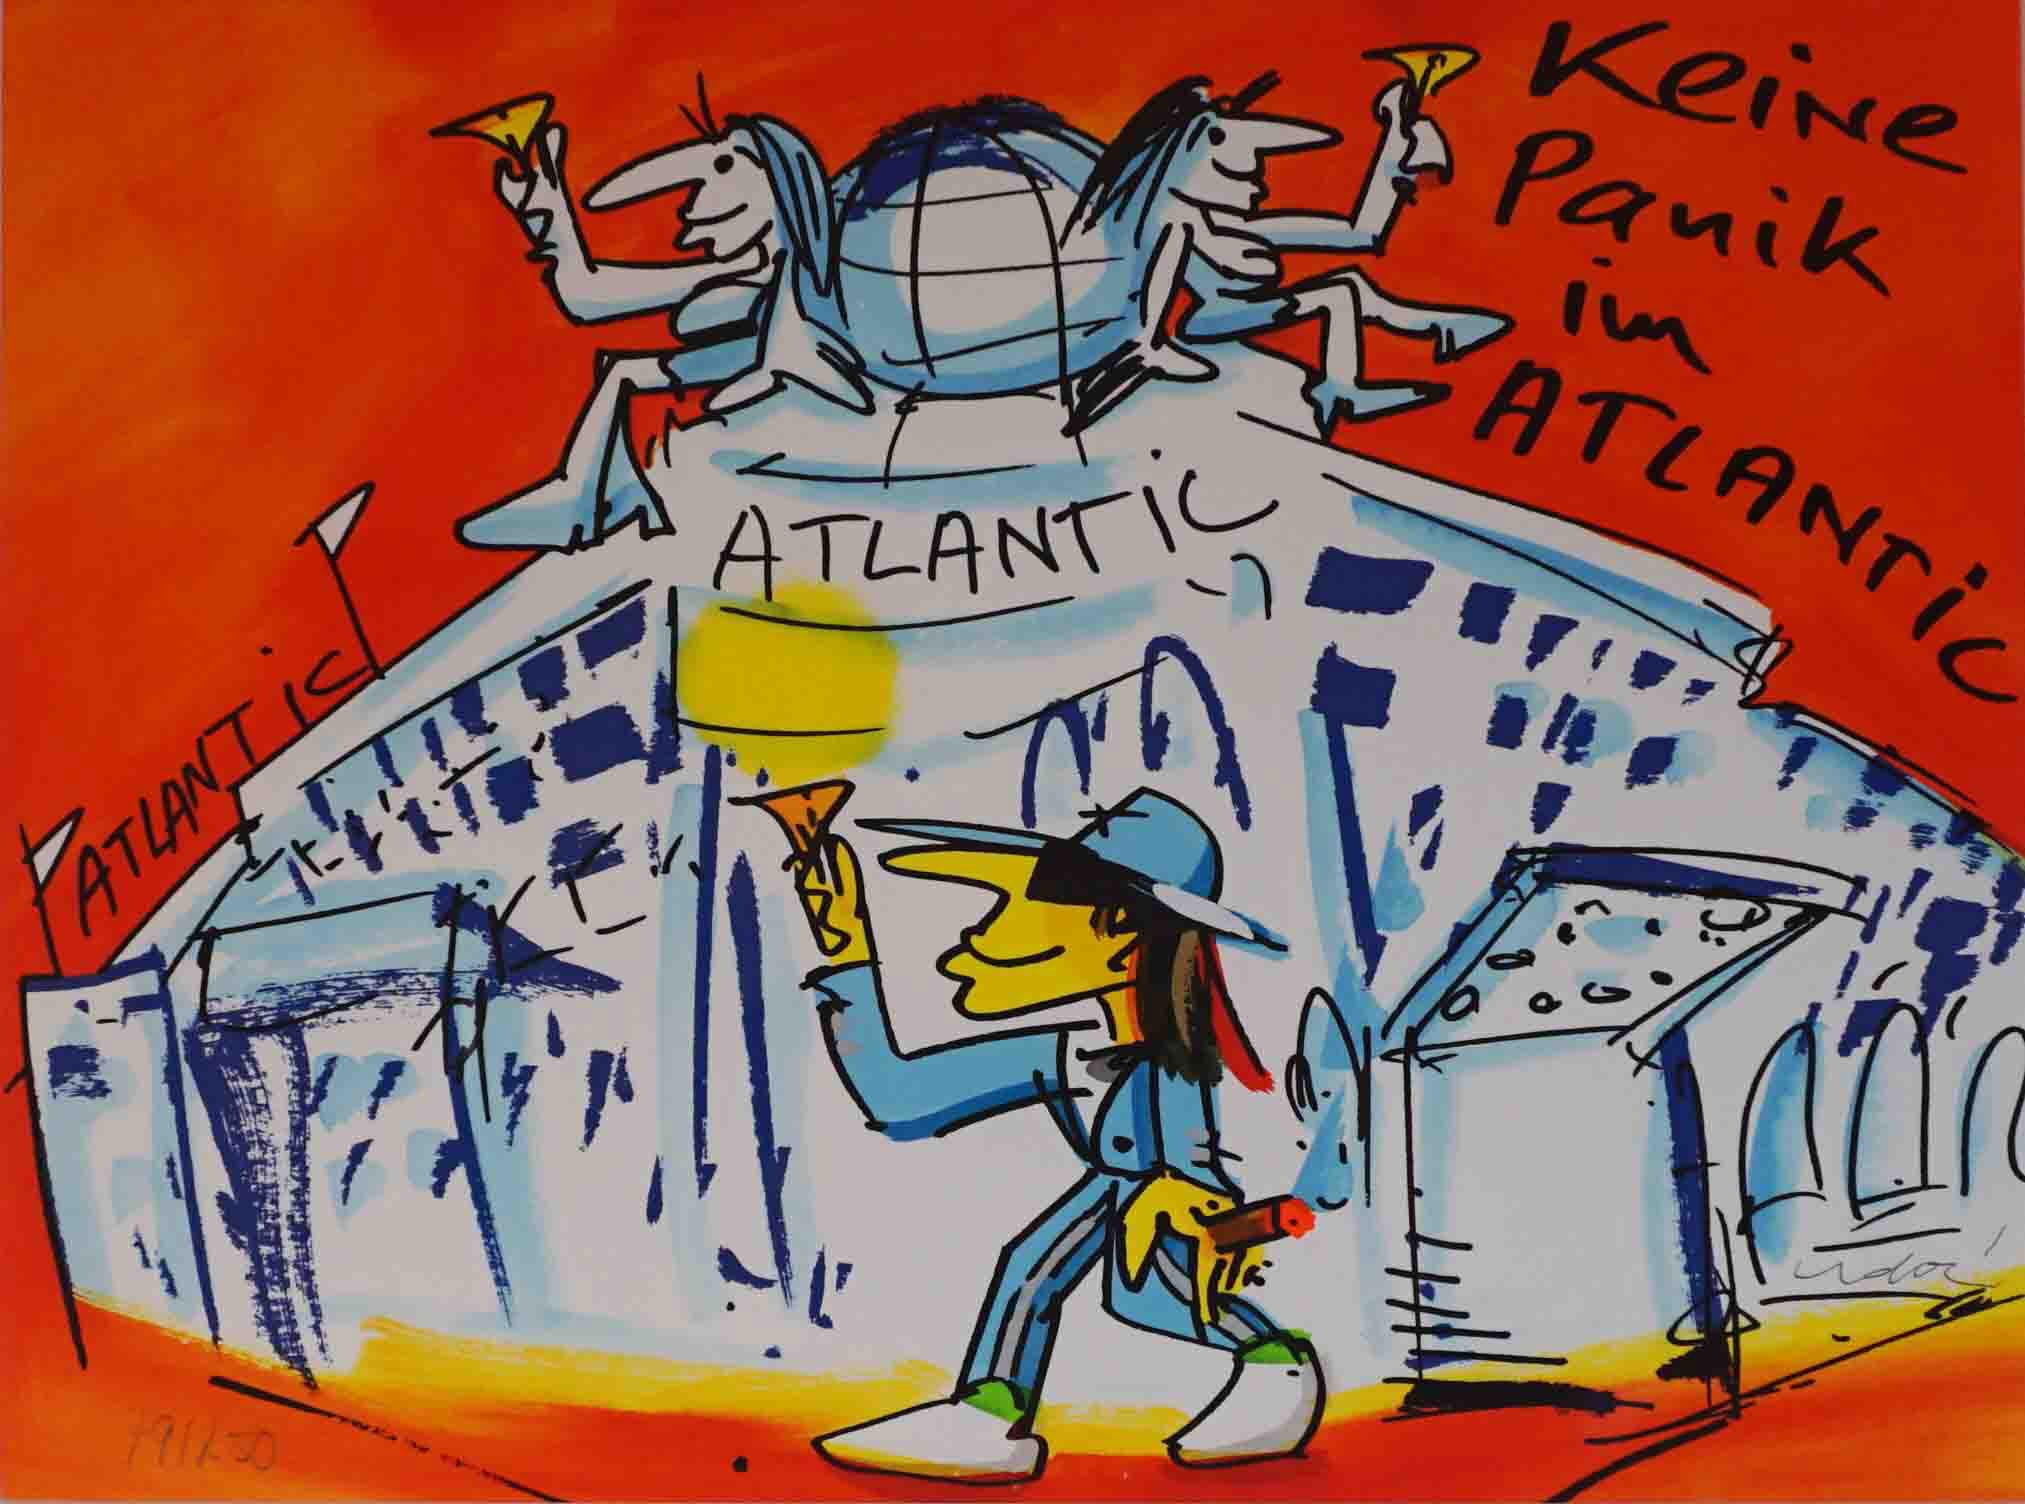 Udo Lindenberg "Keine Panik Im Atlantic"